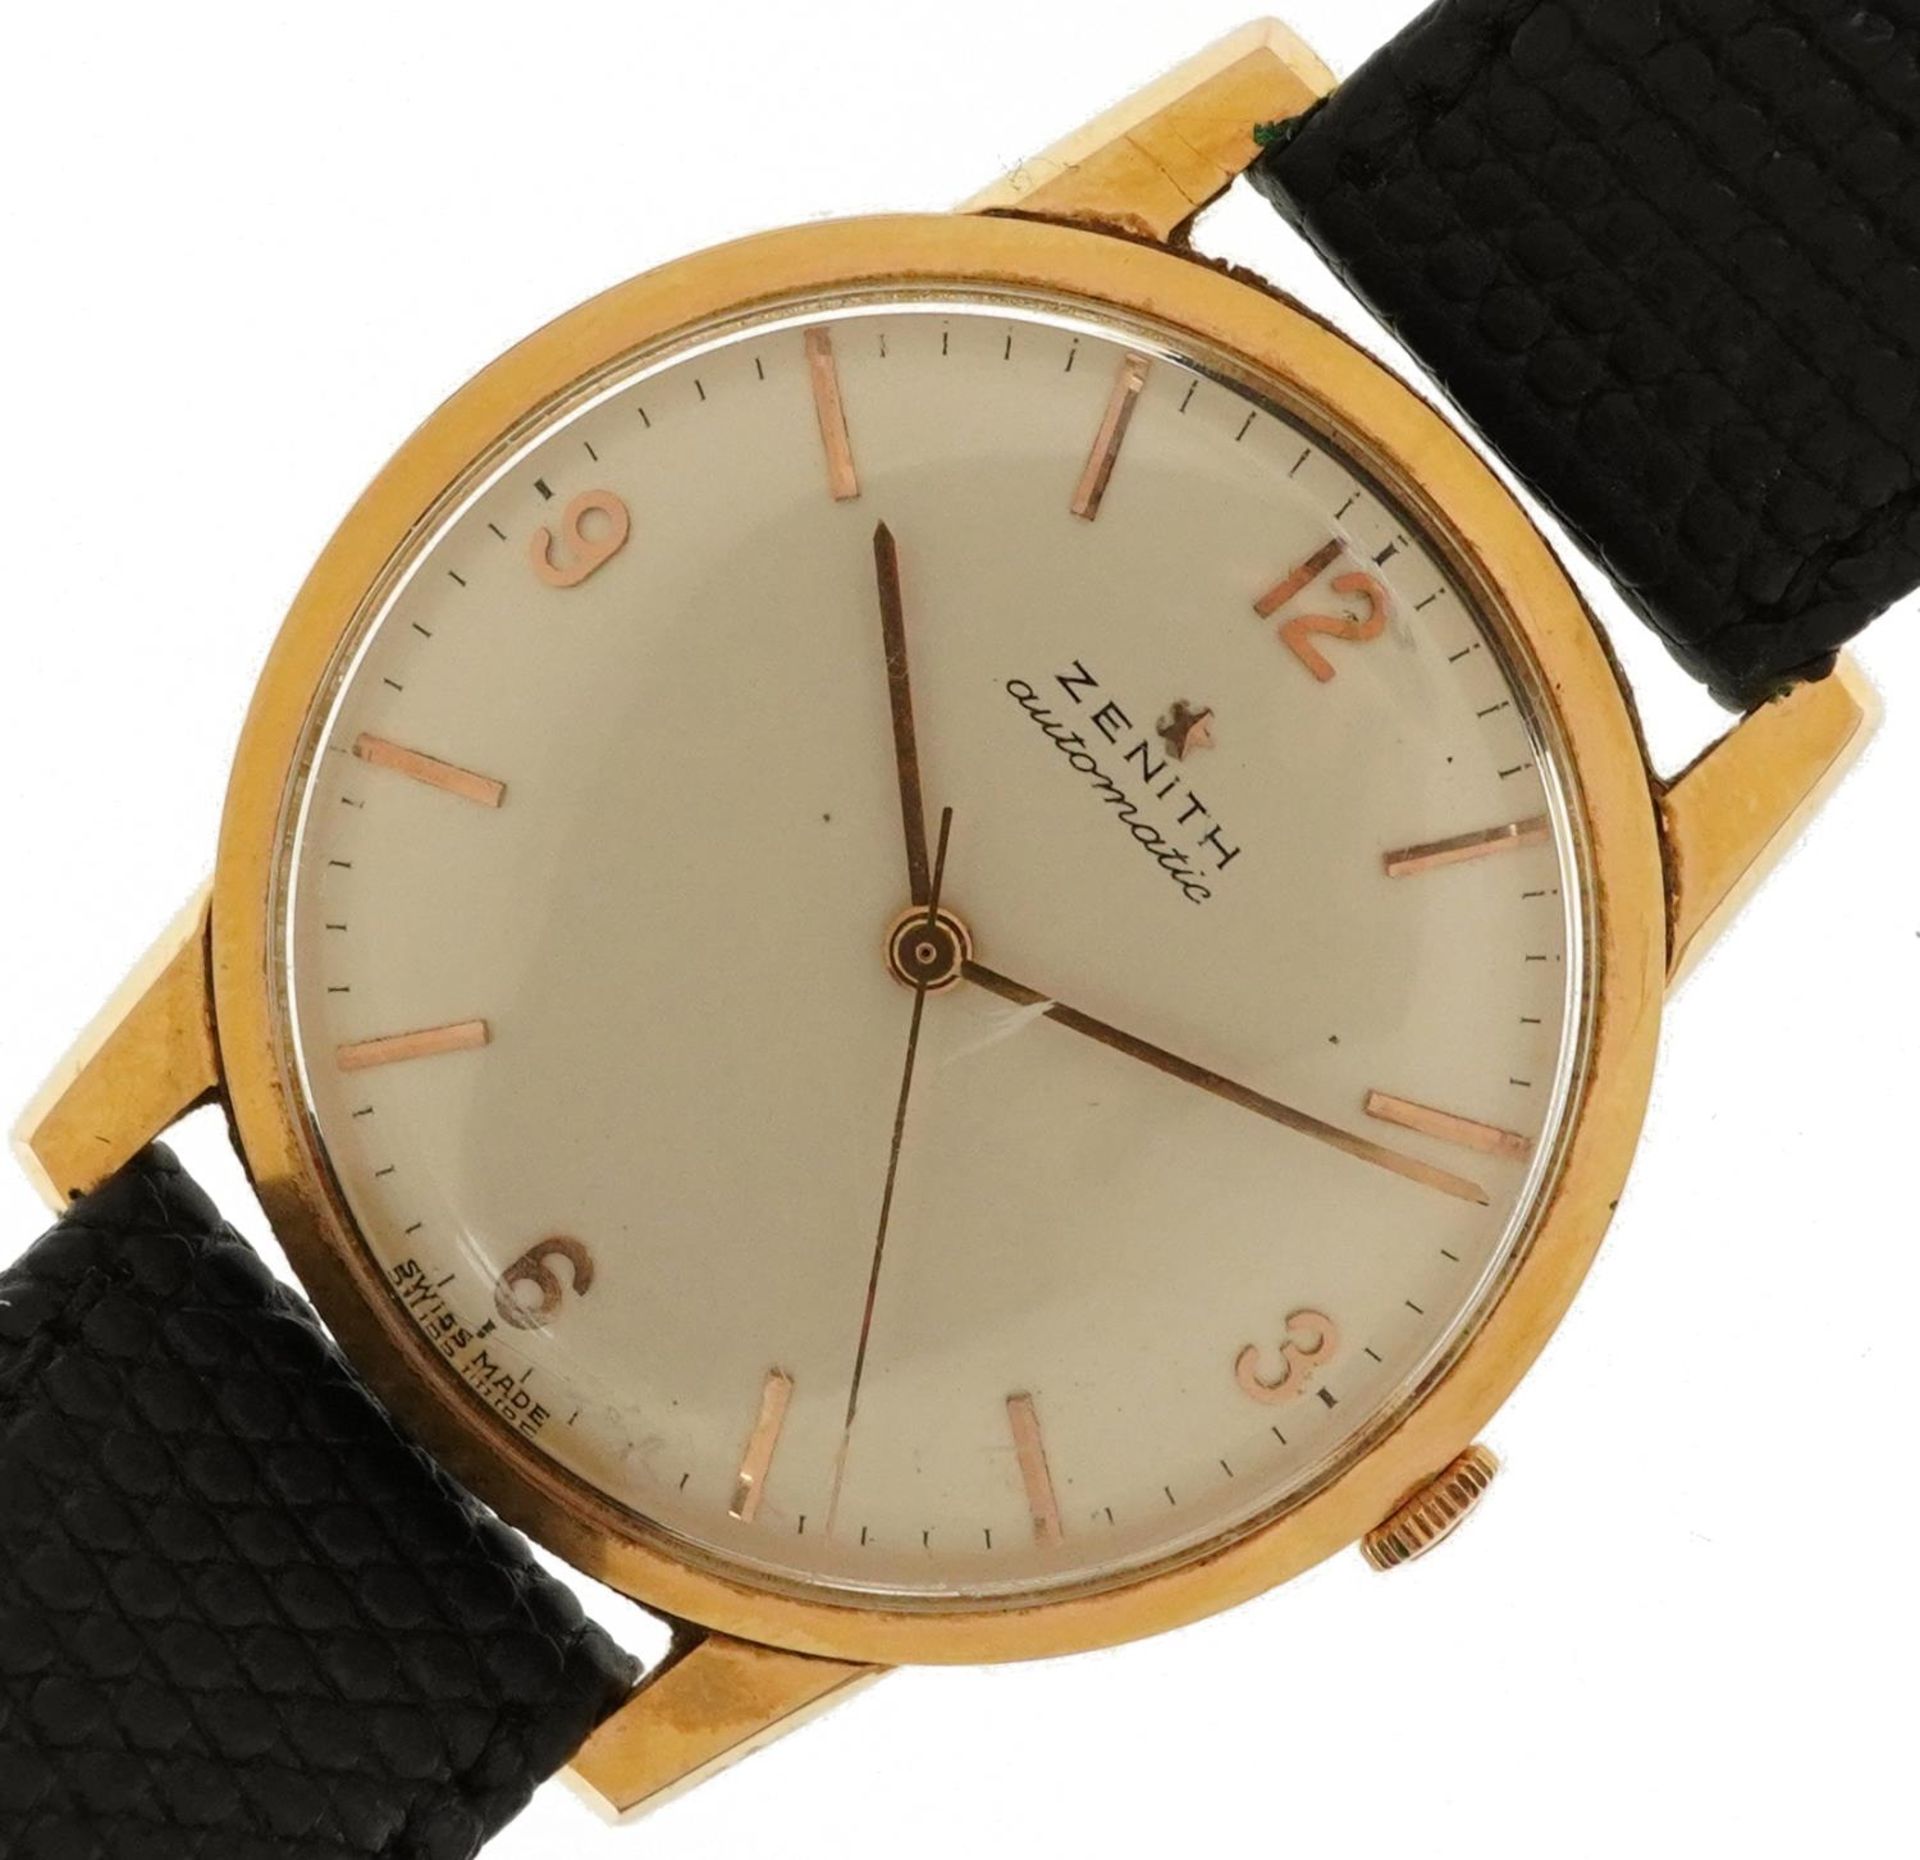 Zenith, gentlemen's 18ct gold automatic wristwatch, the case numbered 845031, 35mm in diameter,